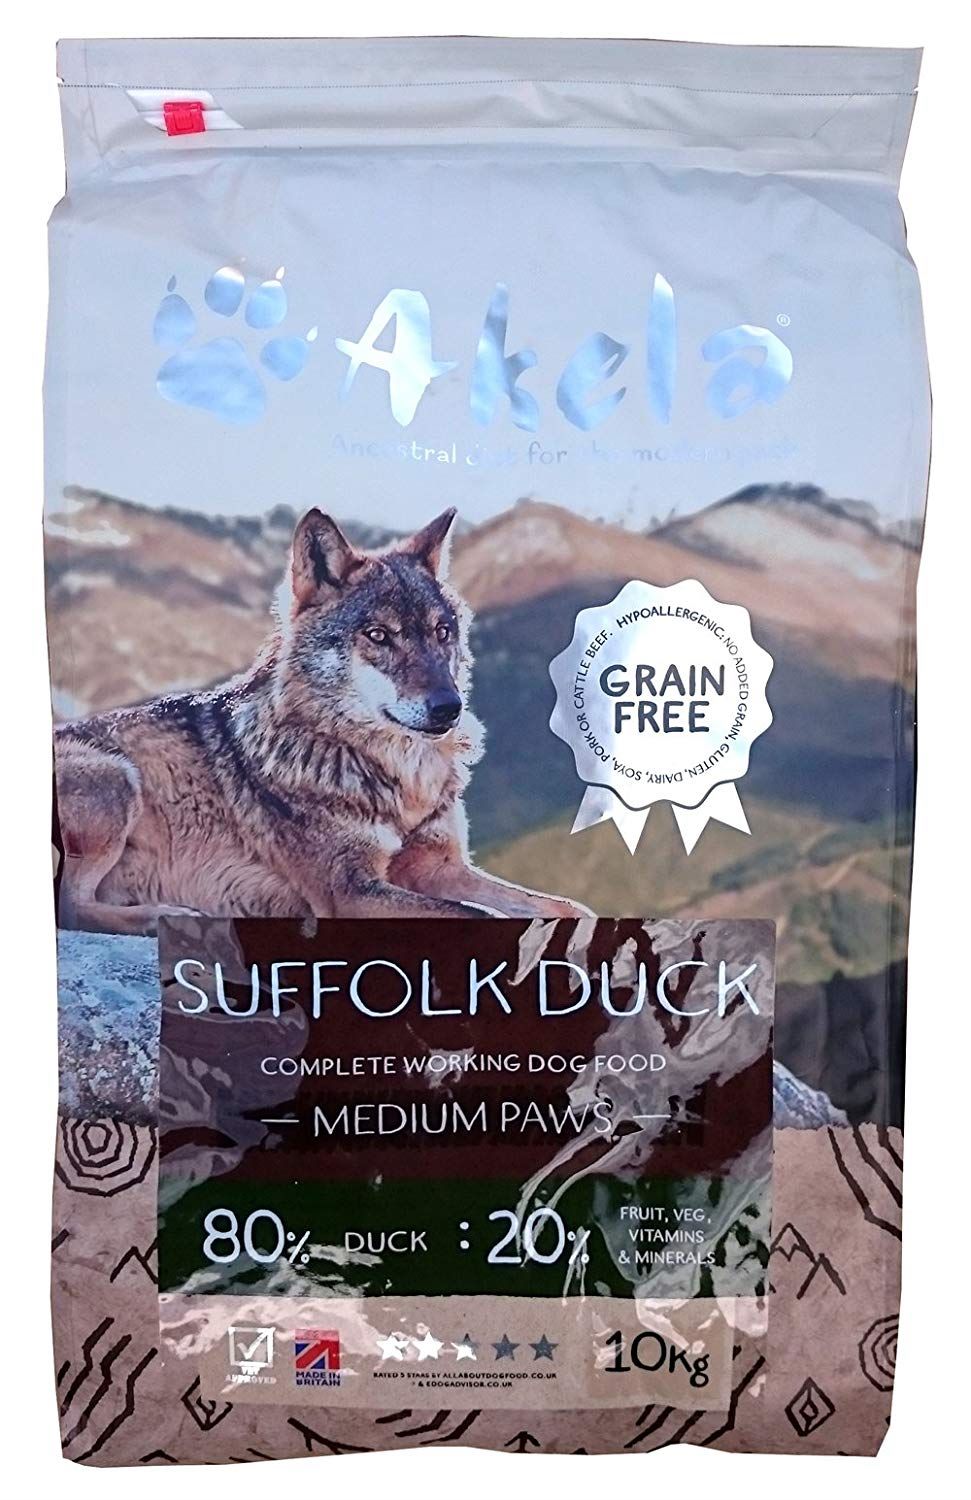 Akela 80:20 Suffolk Duck Grain Free 10kg Mediium Paws